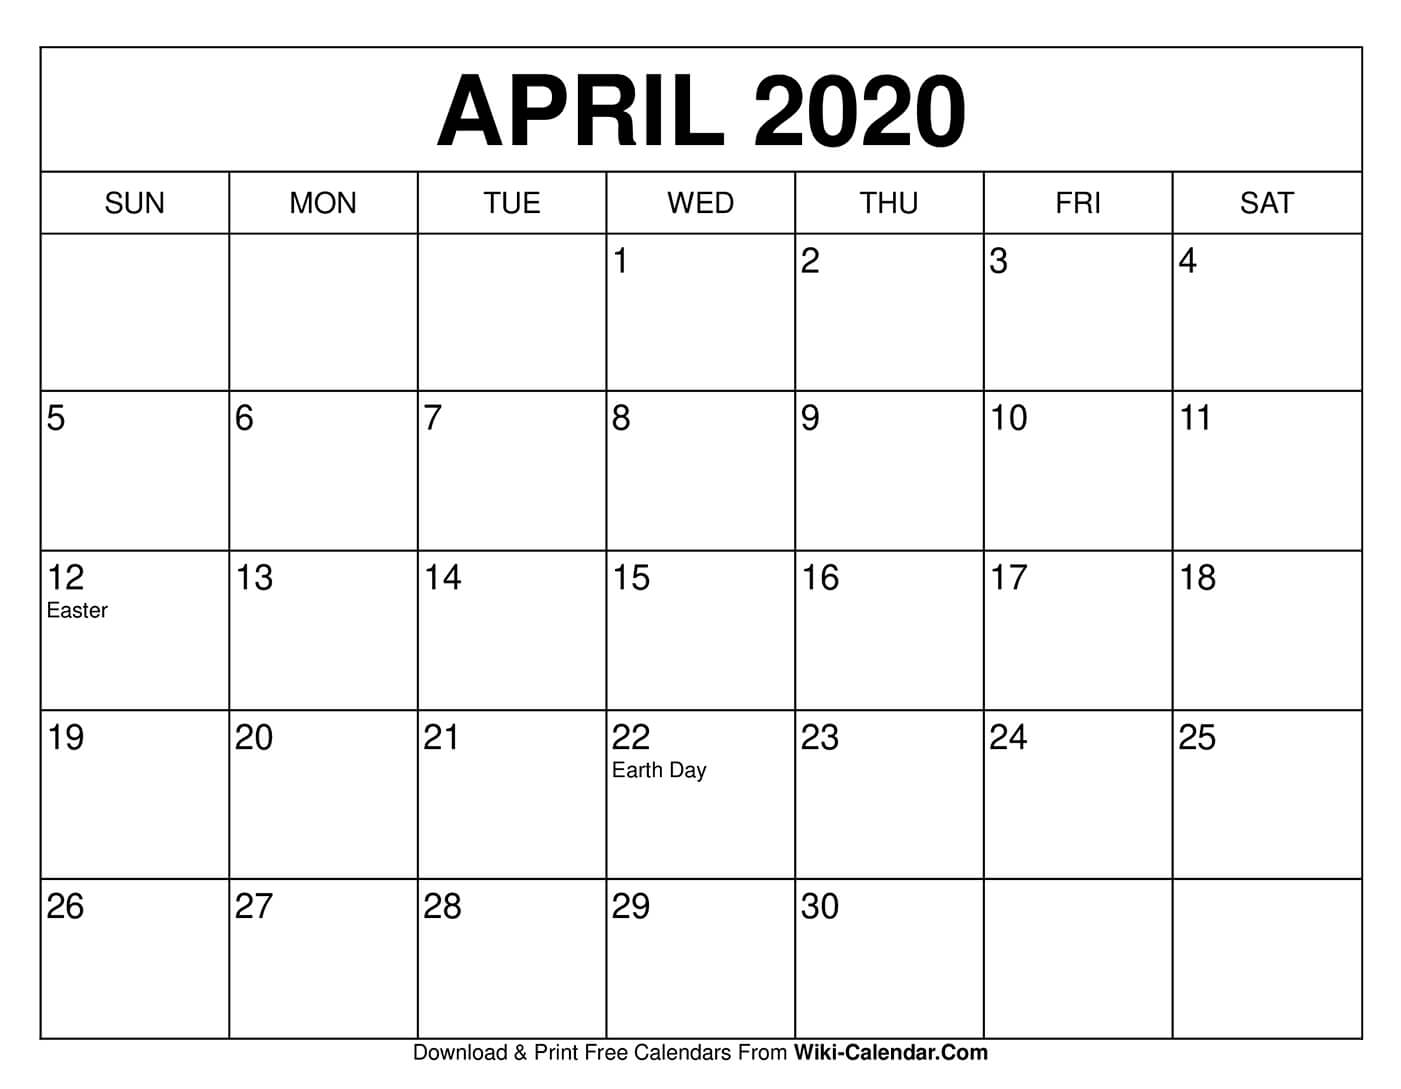 wiki calendar september 2021 Free Printable April 2020 Calendars wiki calendar september 2021